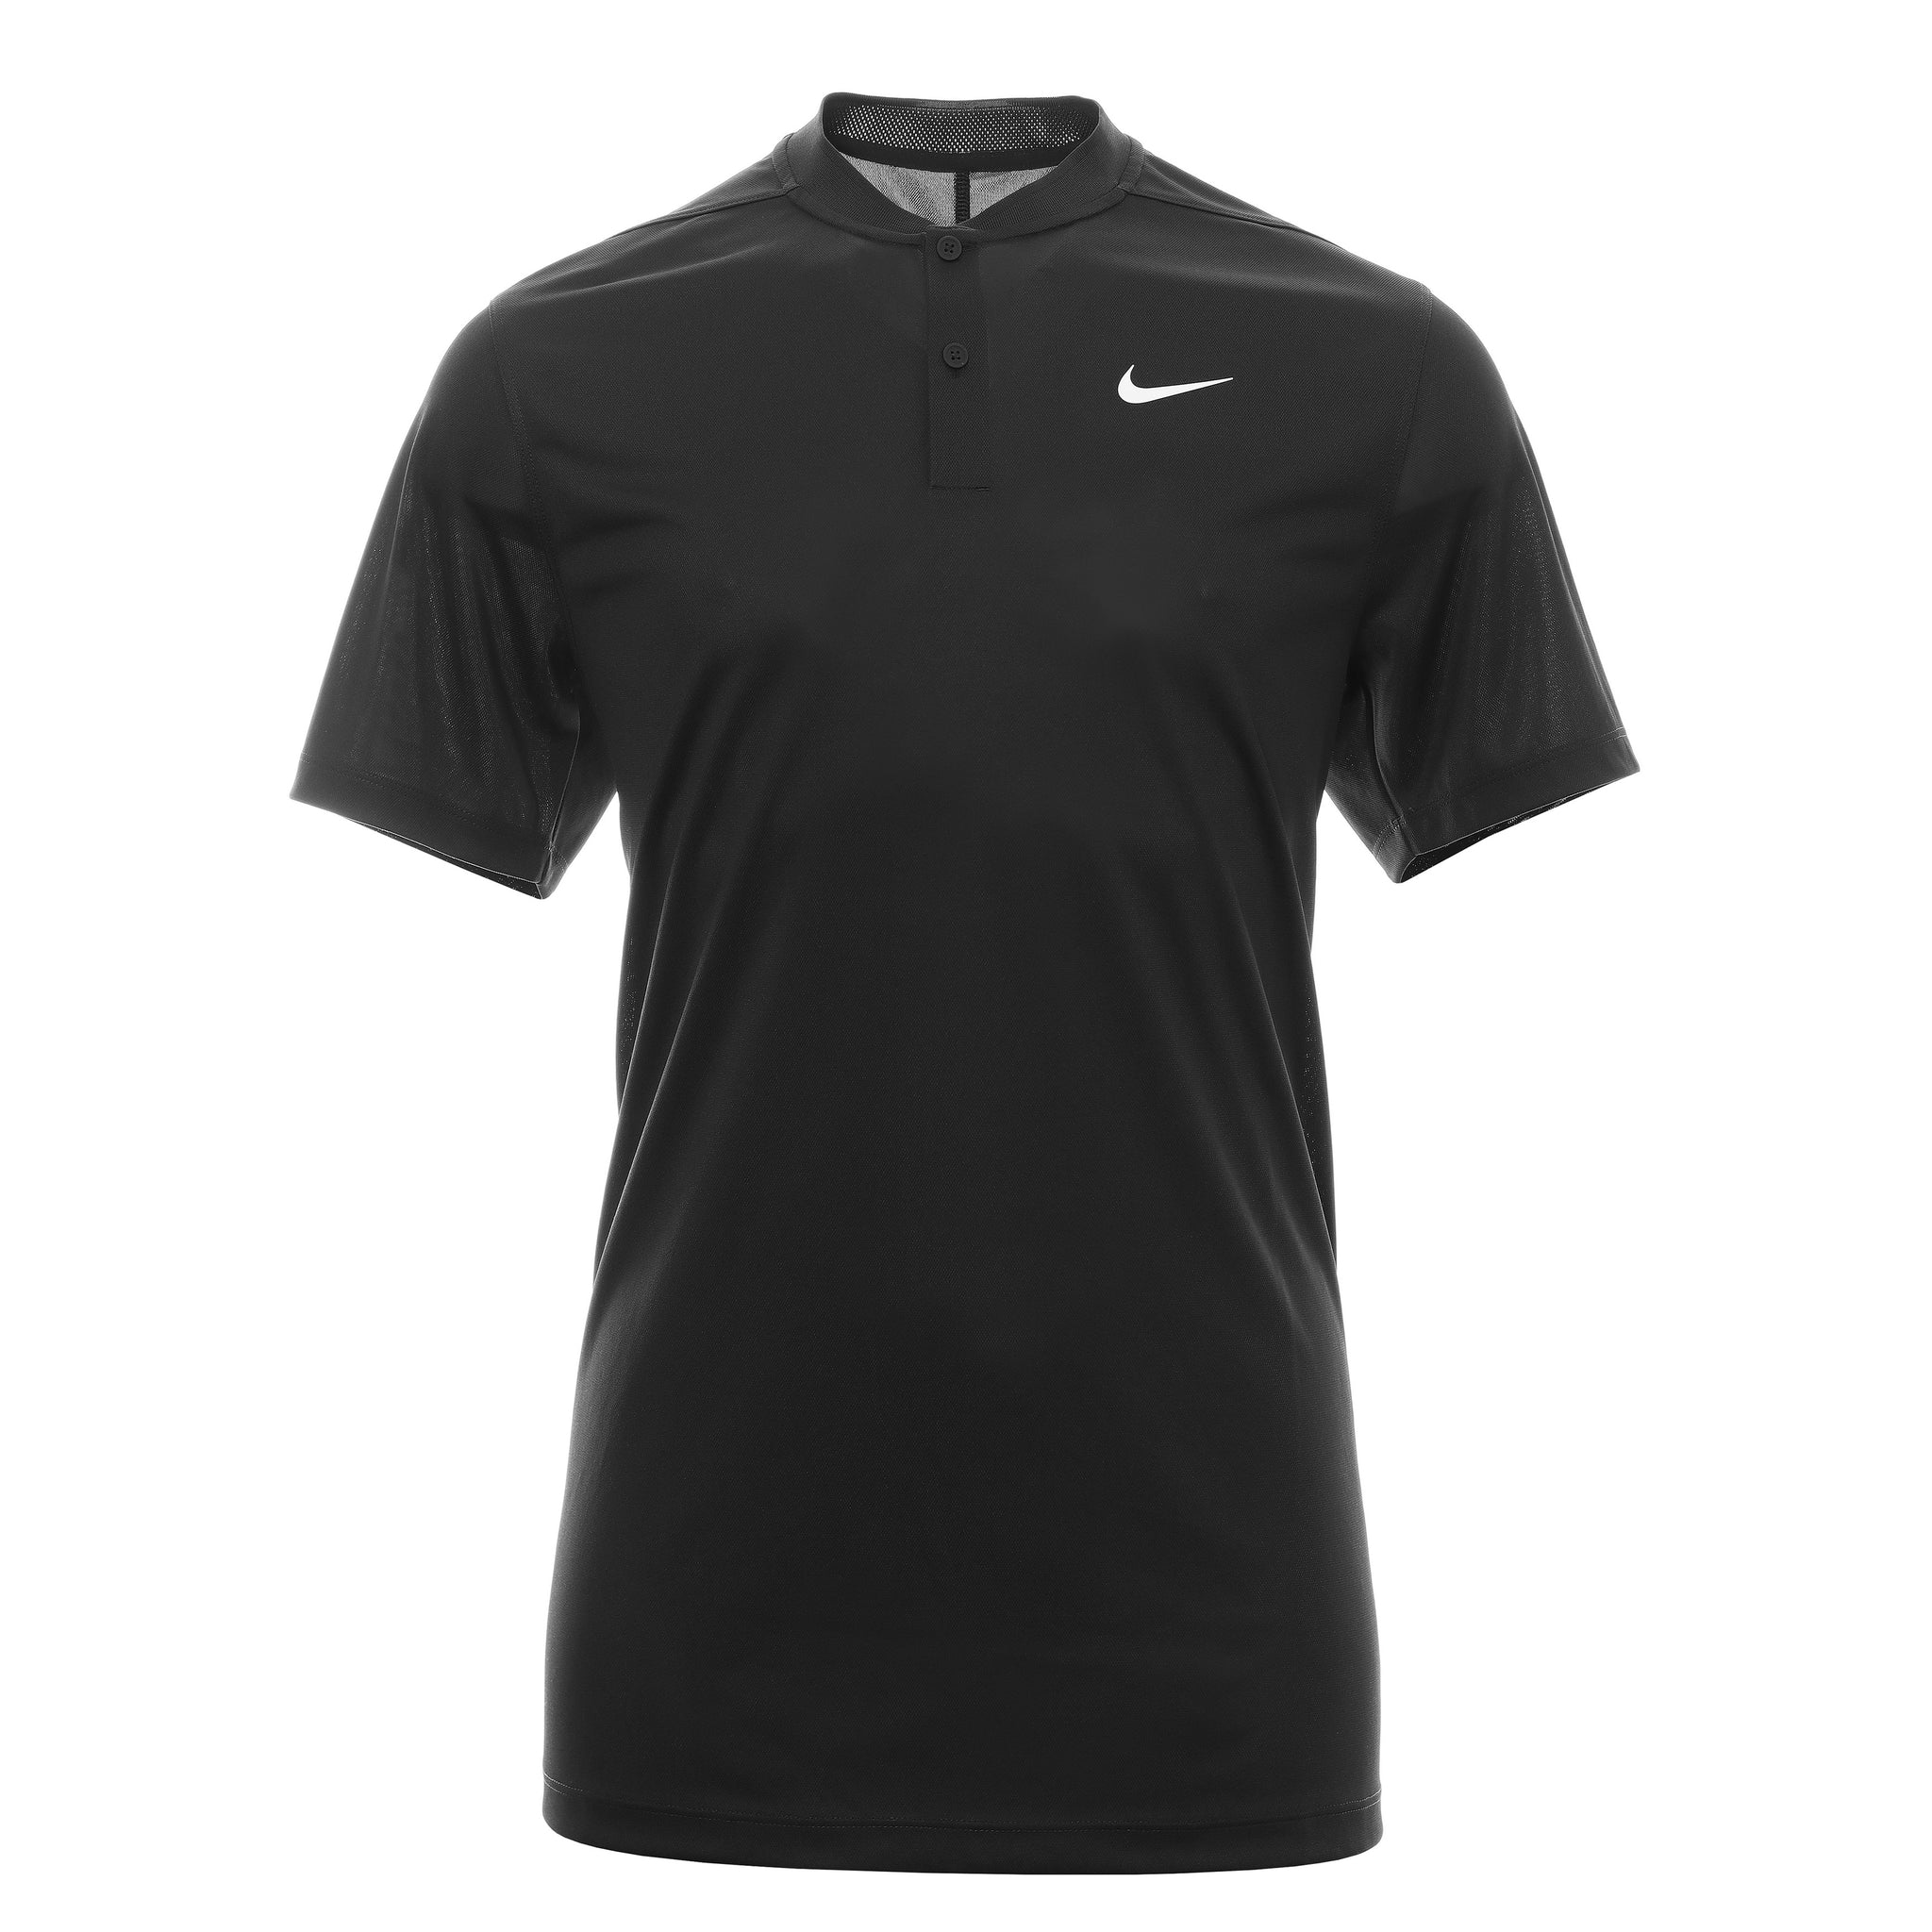 nike-golf-dri-fit-victory-blade-shirt-dh0838-010-black